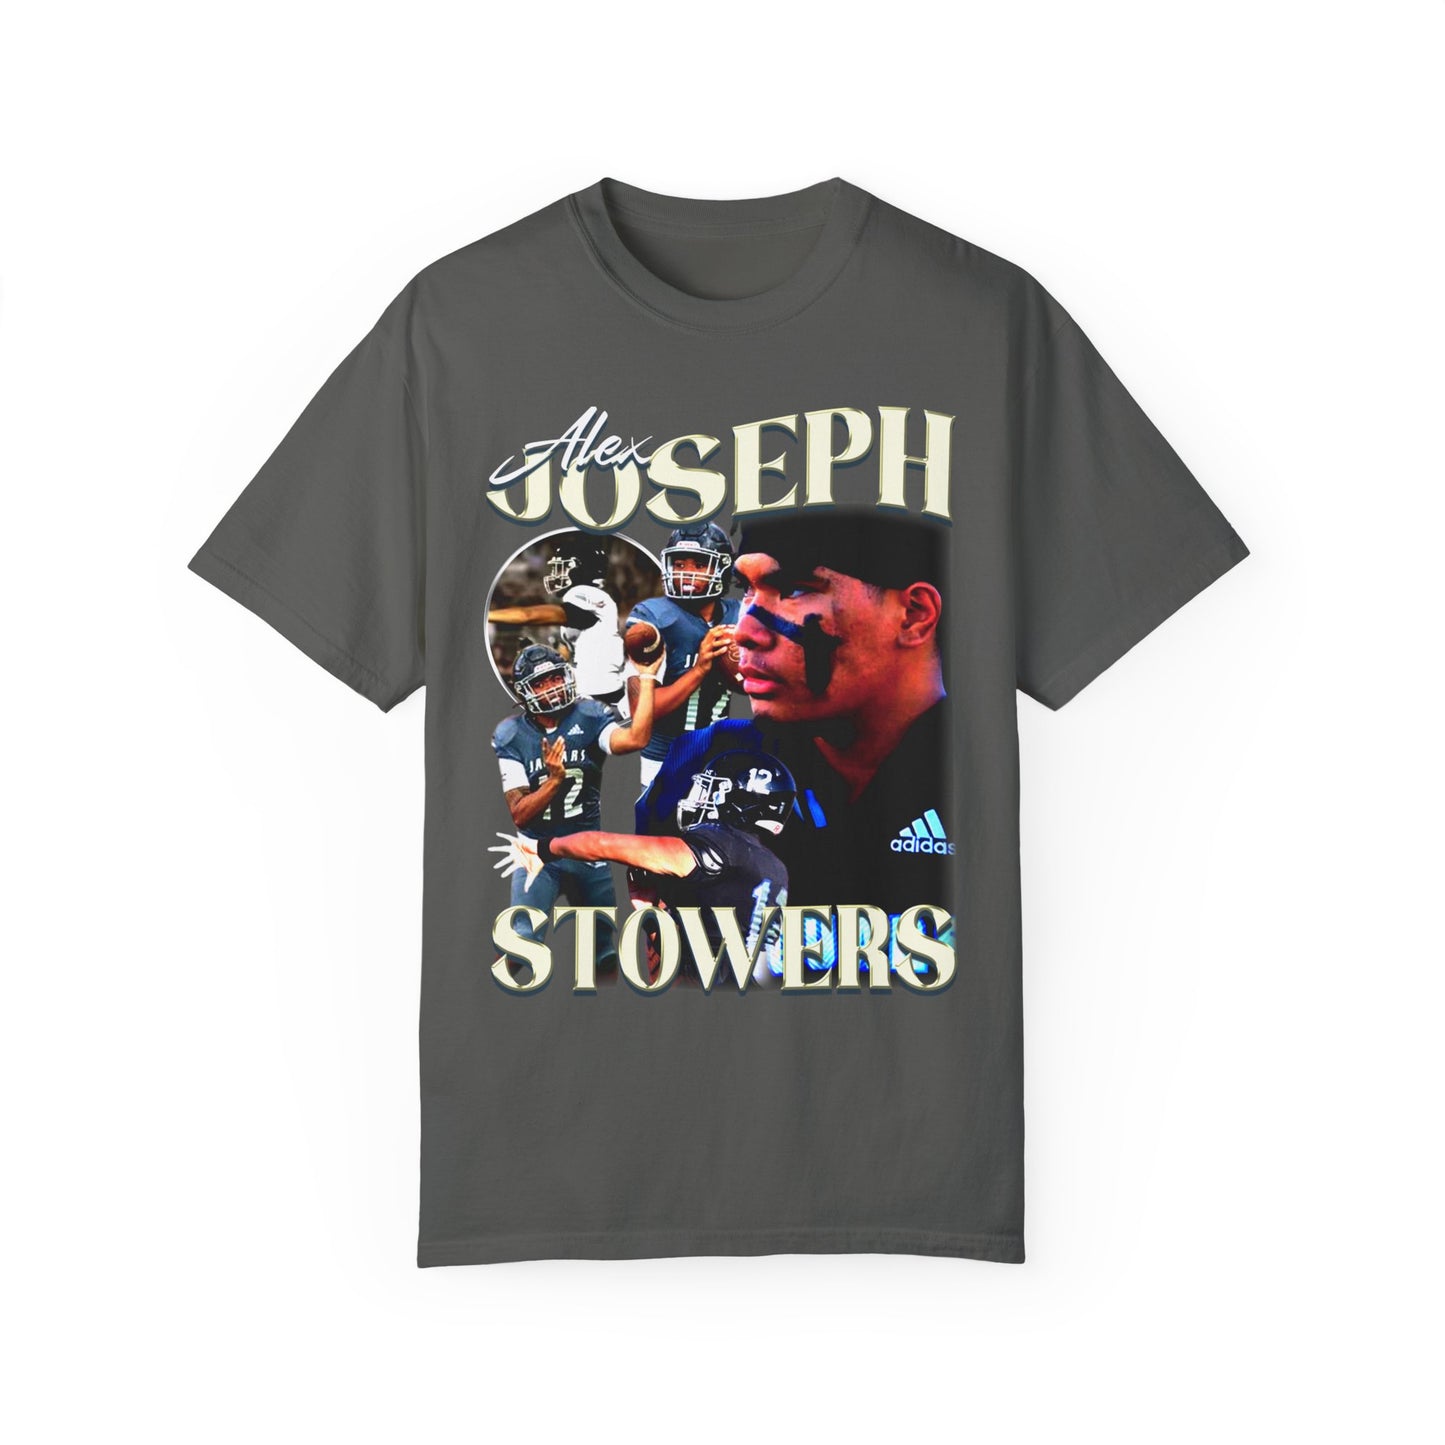 Alex Joseph Stowers Graphic T-shirt